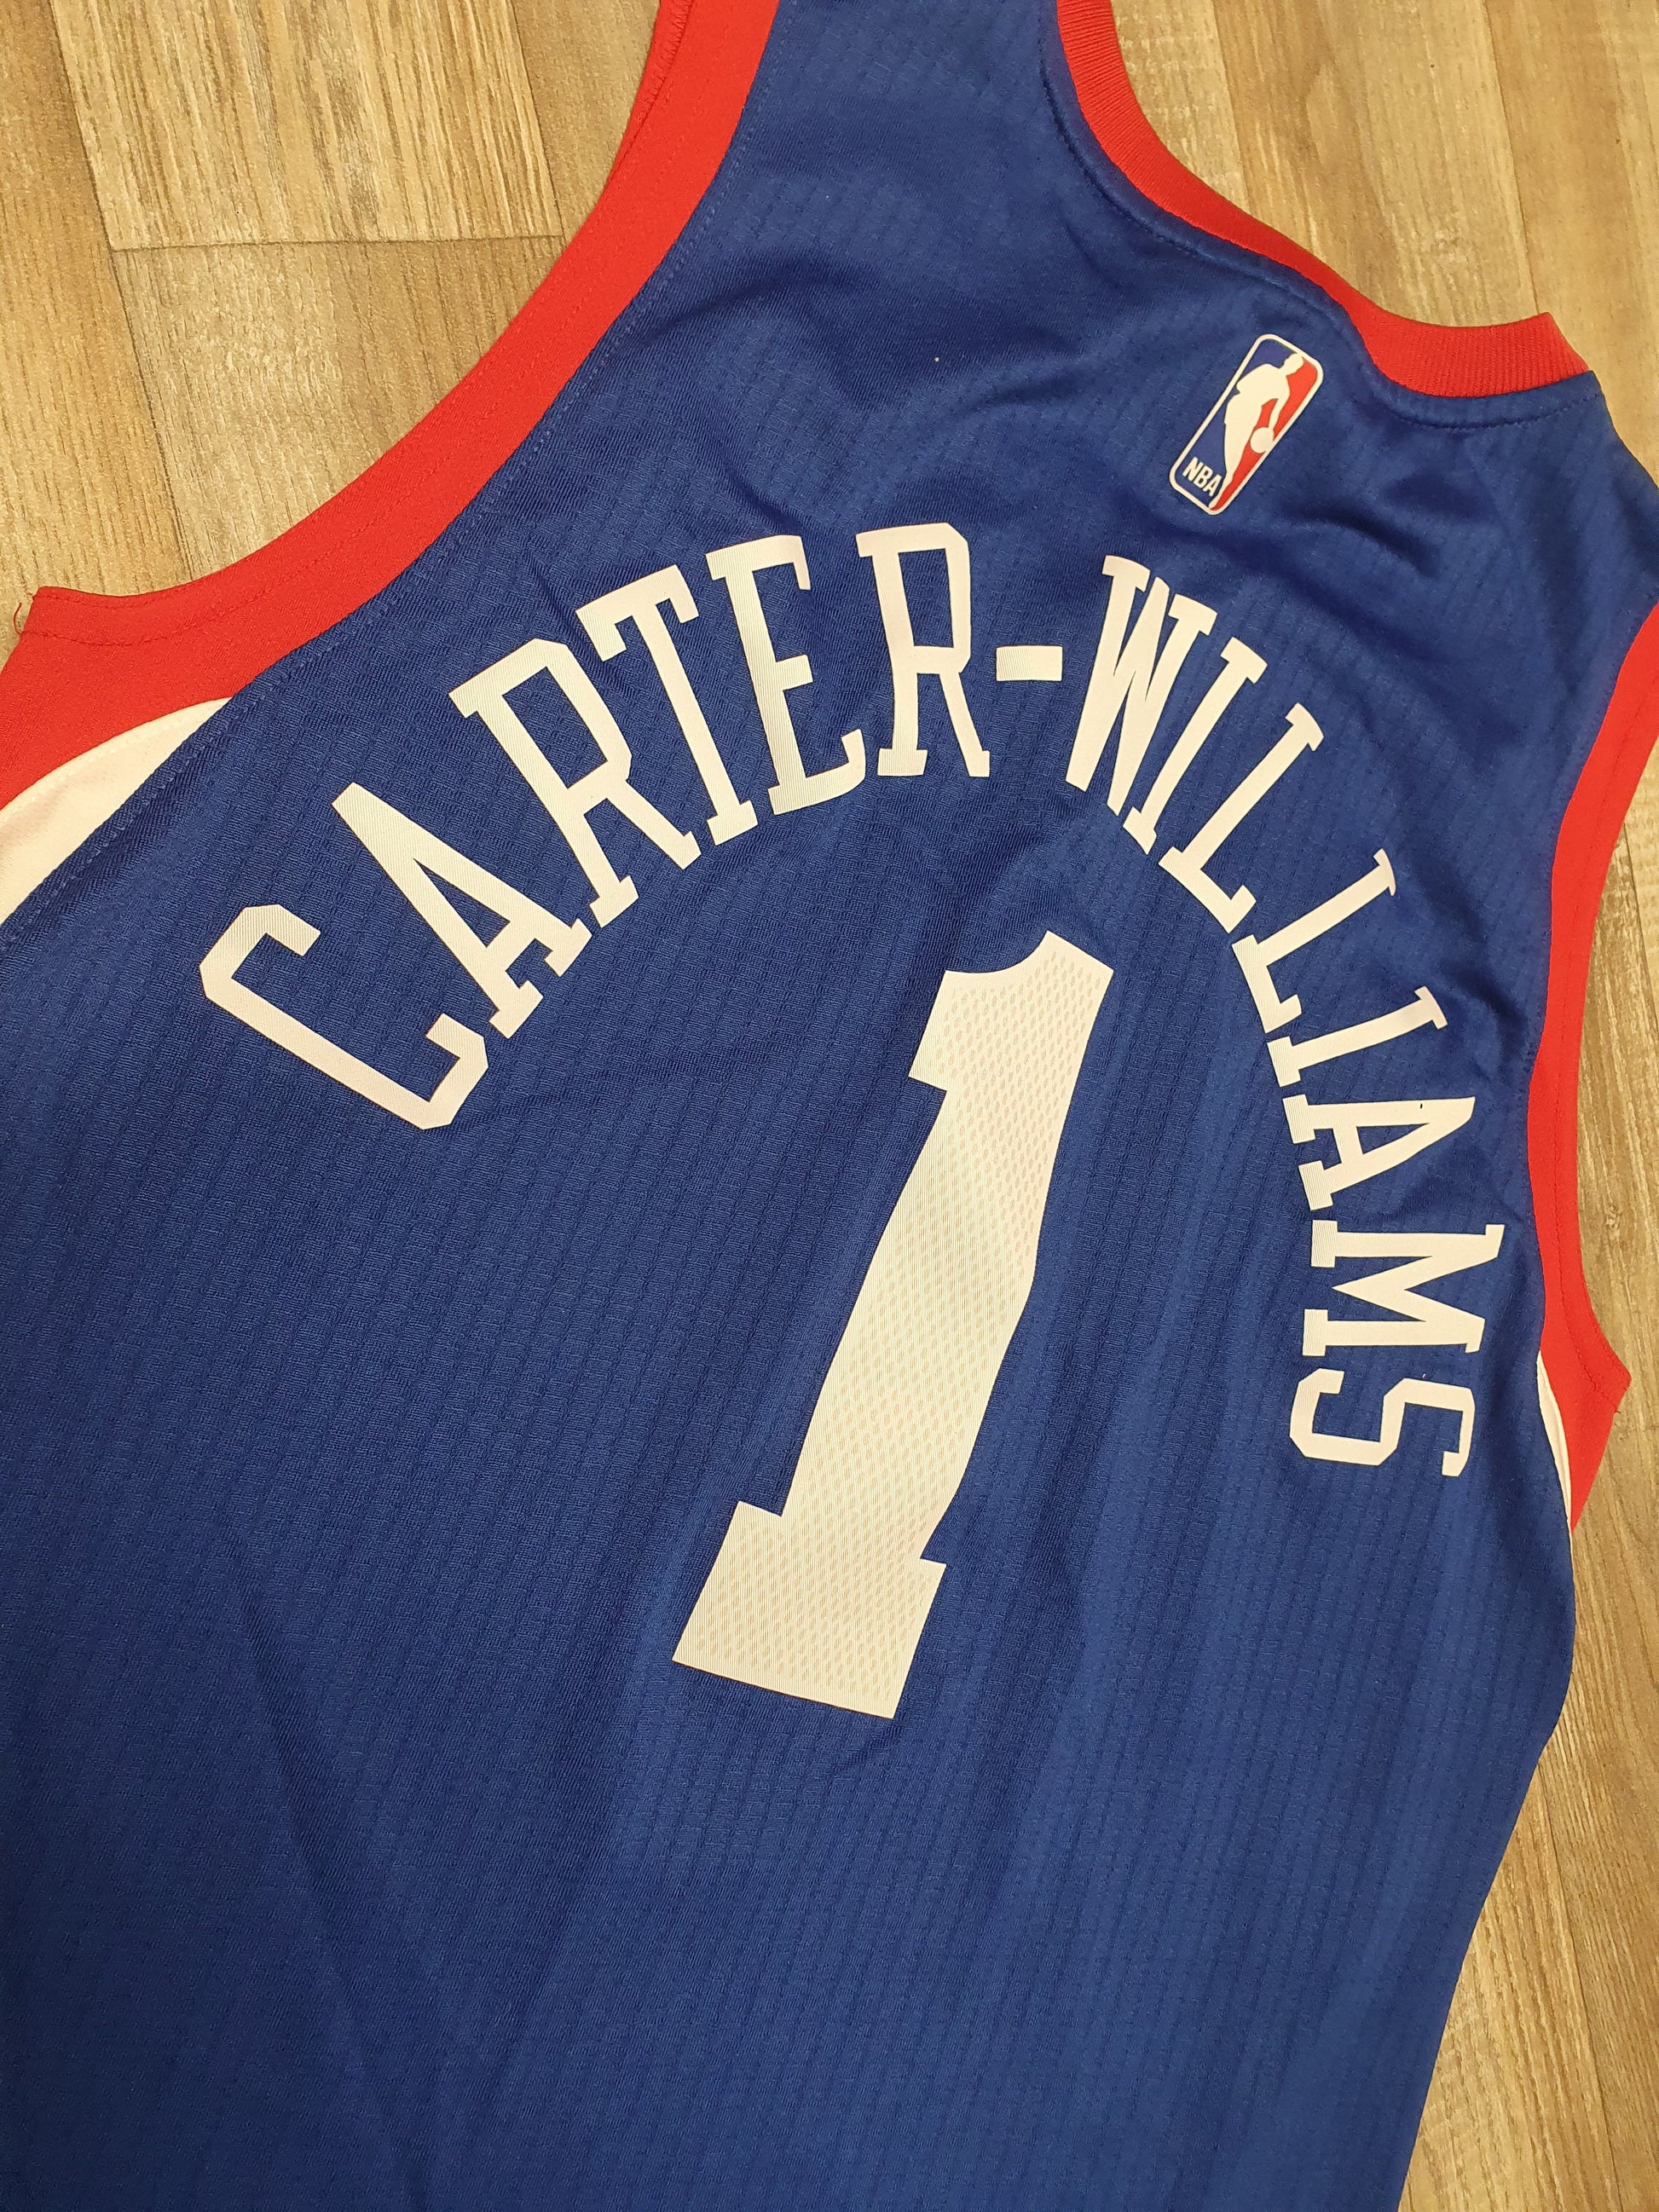 Michael Carter-Williams Philadelphia 76ers Jersey Size Small